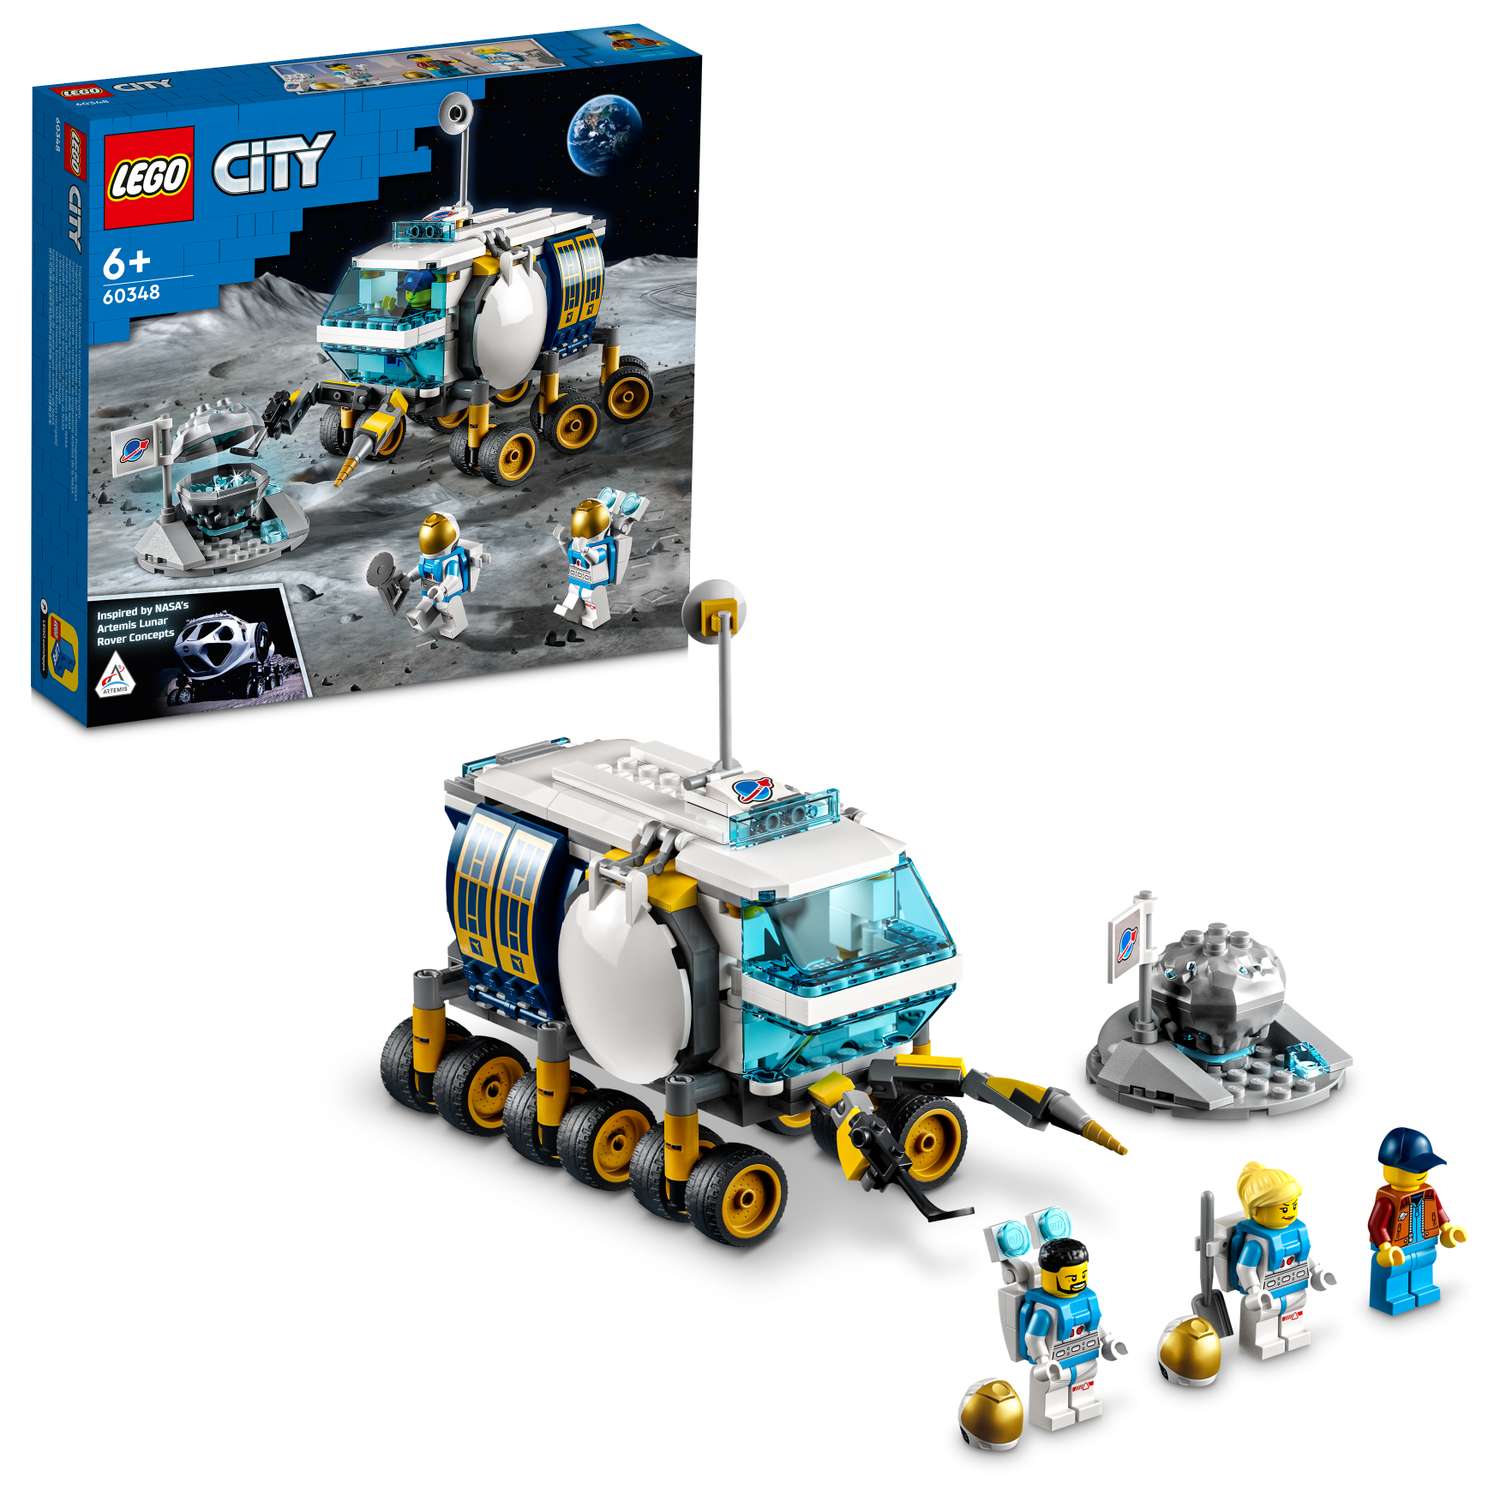 Конструктор LEGO City Space Луноход 60348 - фото 1